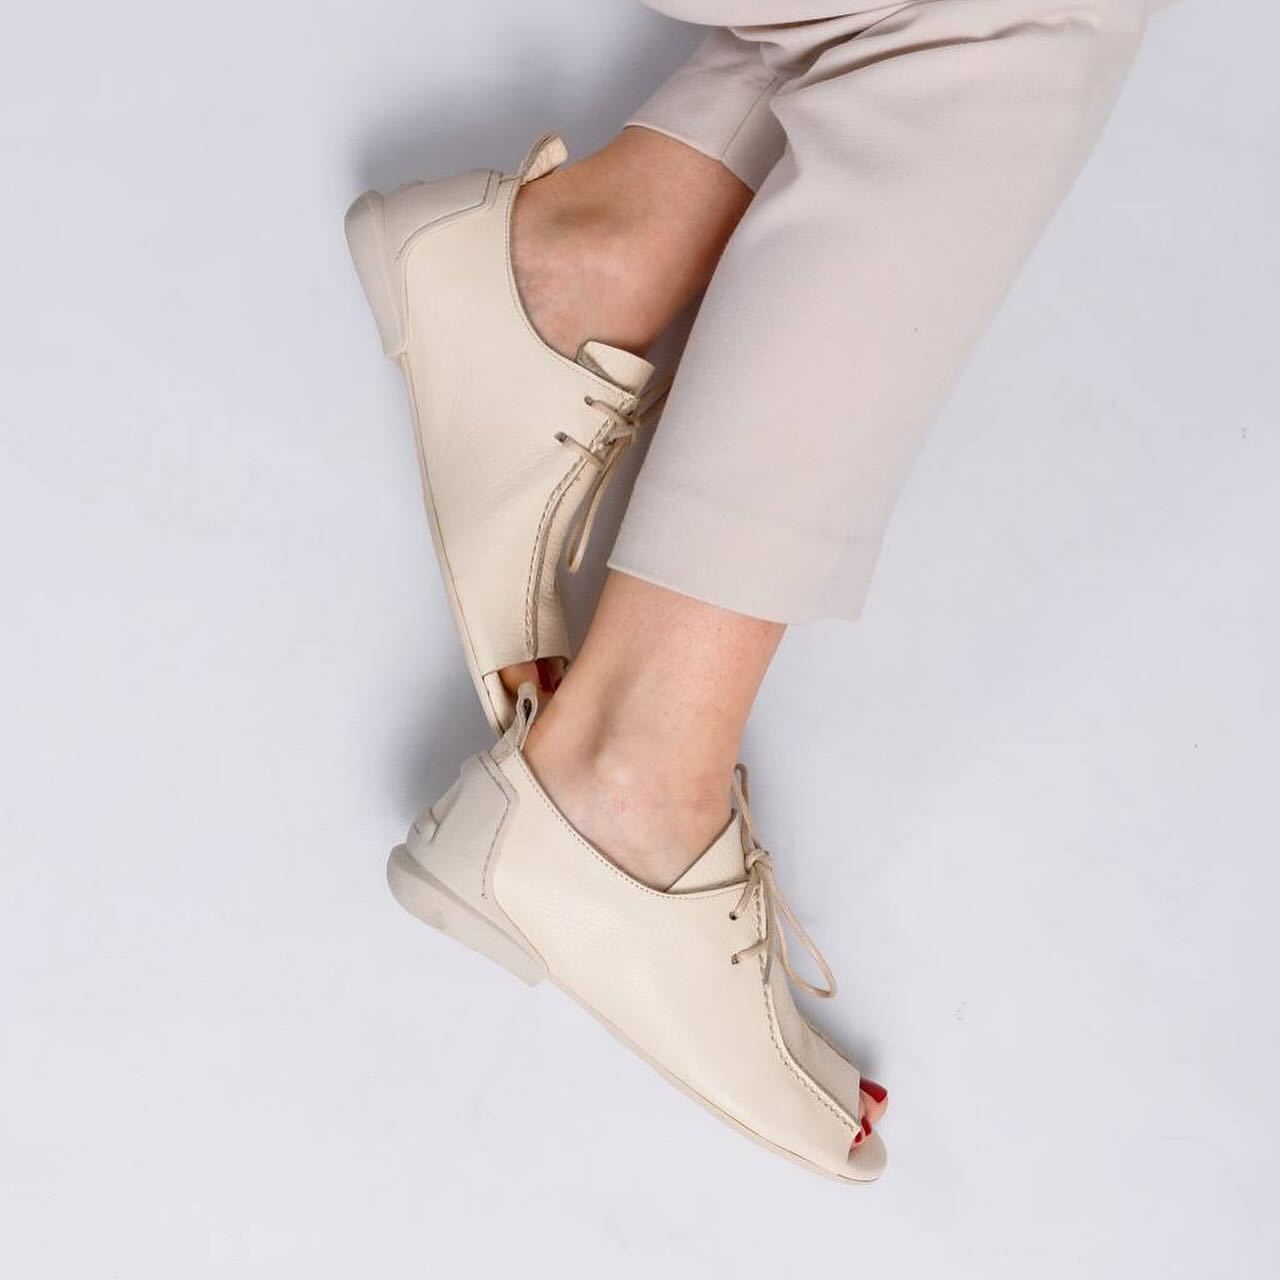 Women's Open Toe Flats Sandals